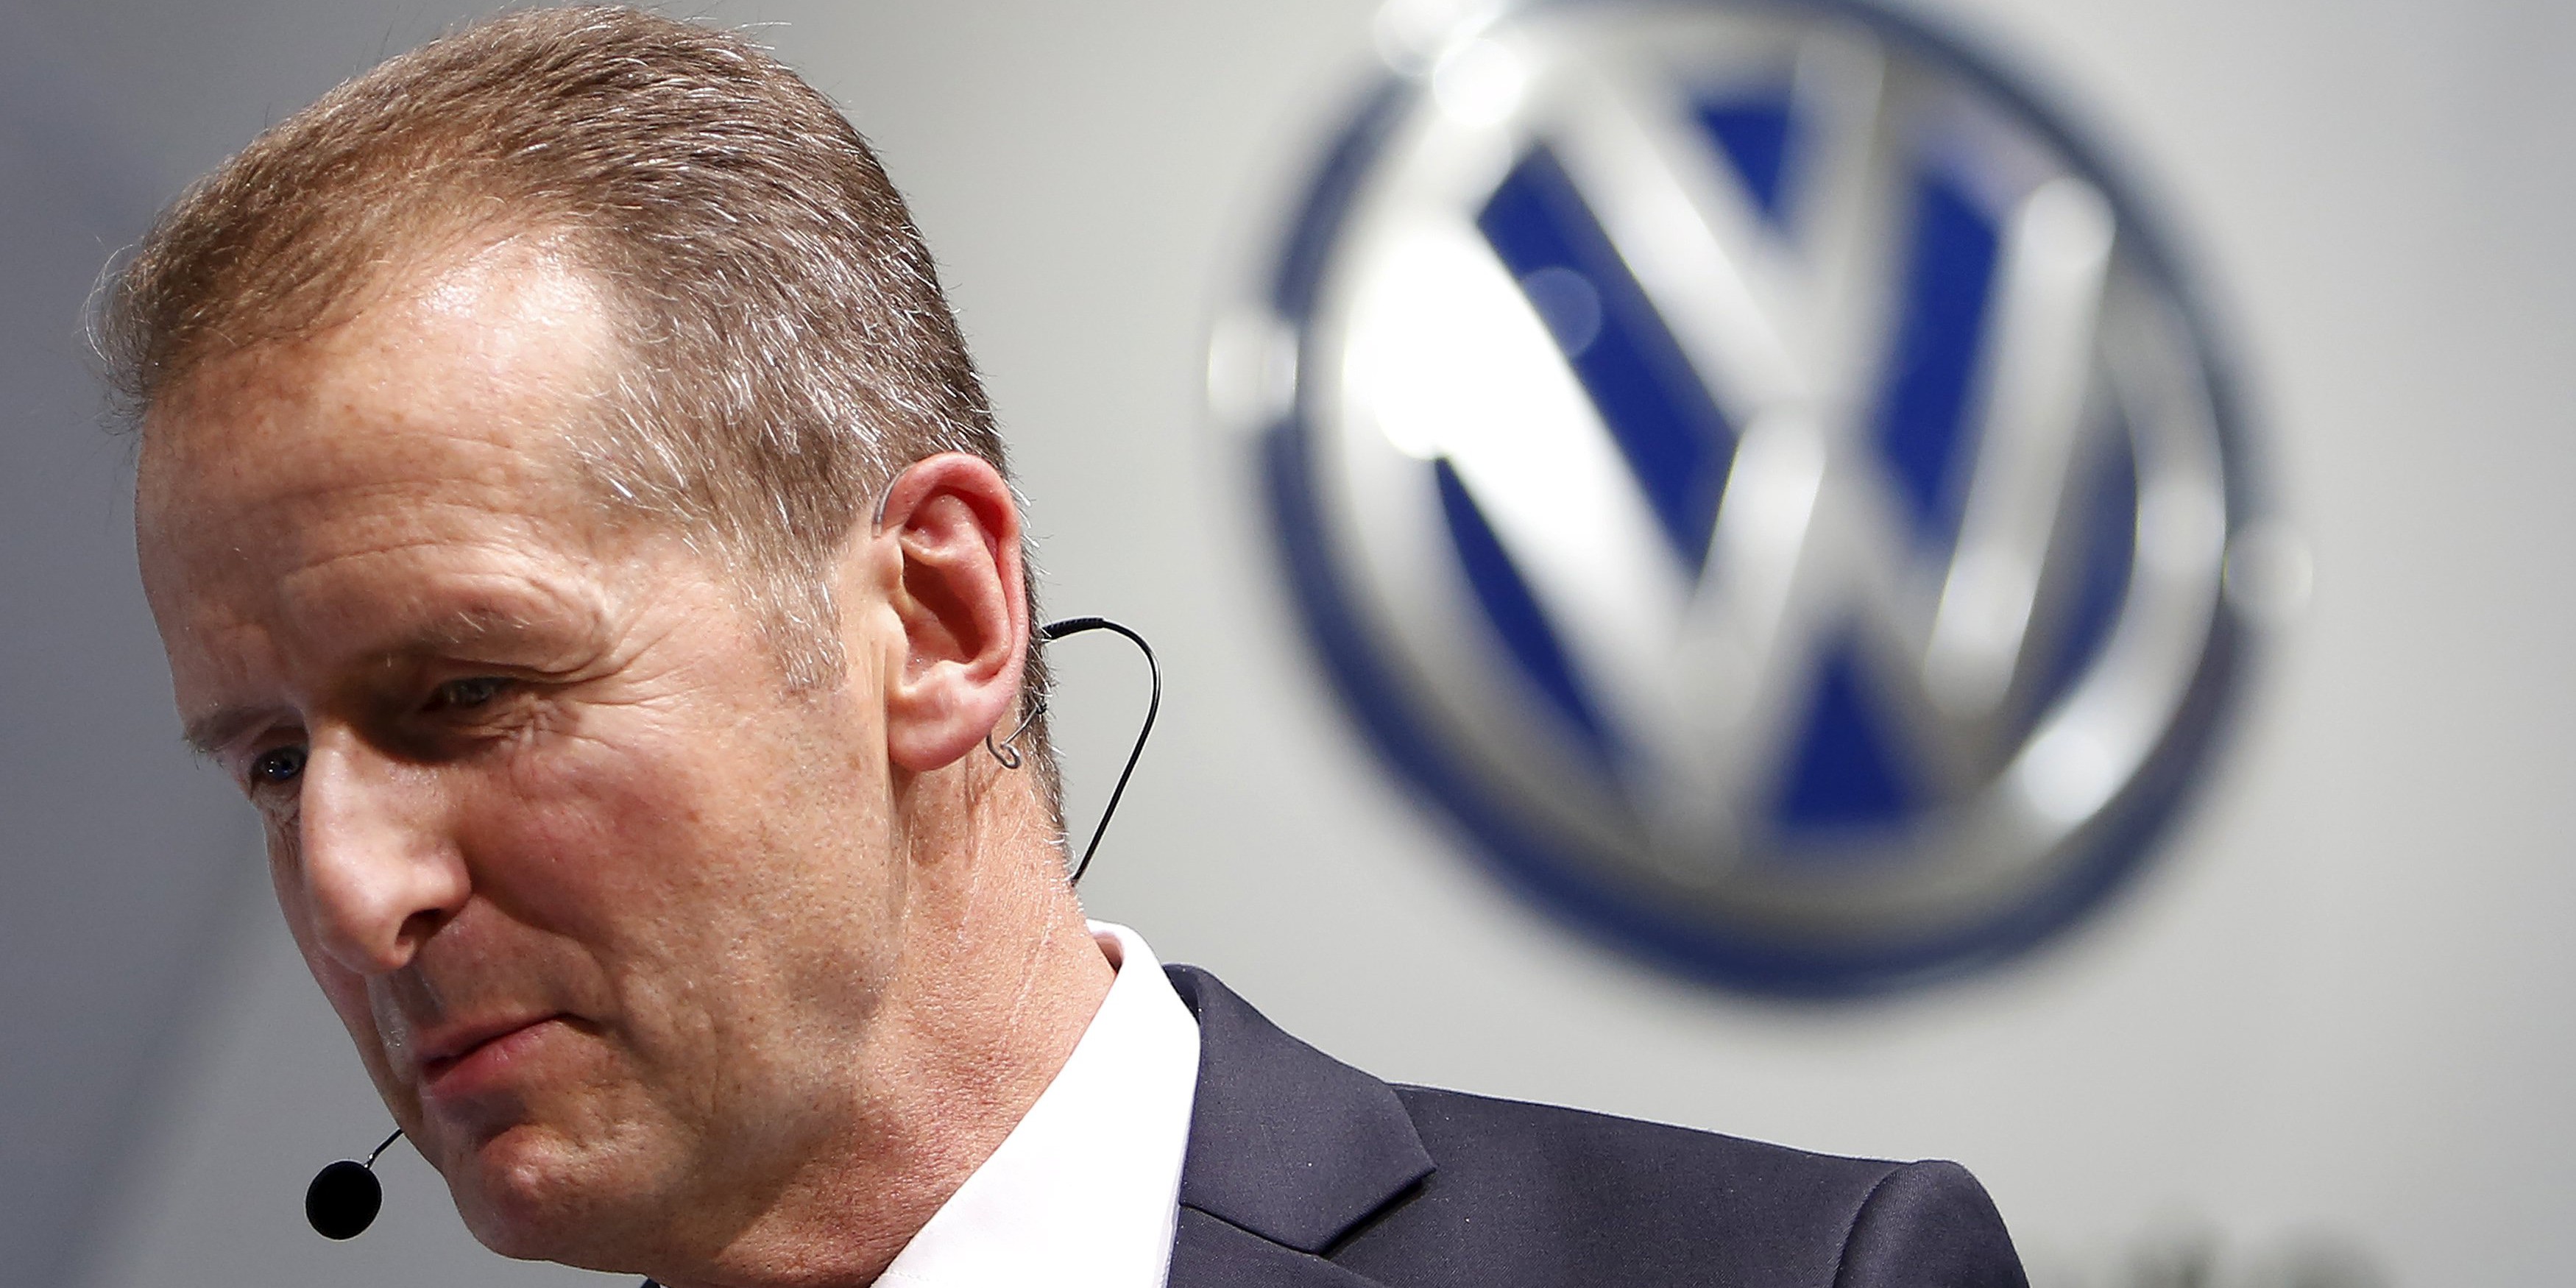 Herbert Diess, chairman of Volkswagen's passenger cars brand, leaves a presentation at the 44th Tokyo Motor Show in Tokyo, Japan, October 28, 2015. REUTERS/Yuya Shino